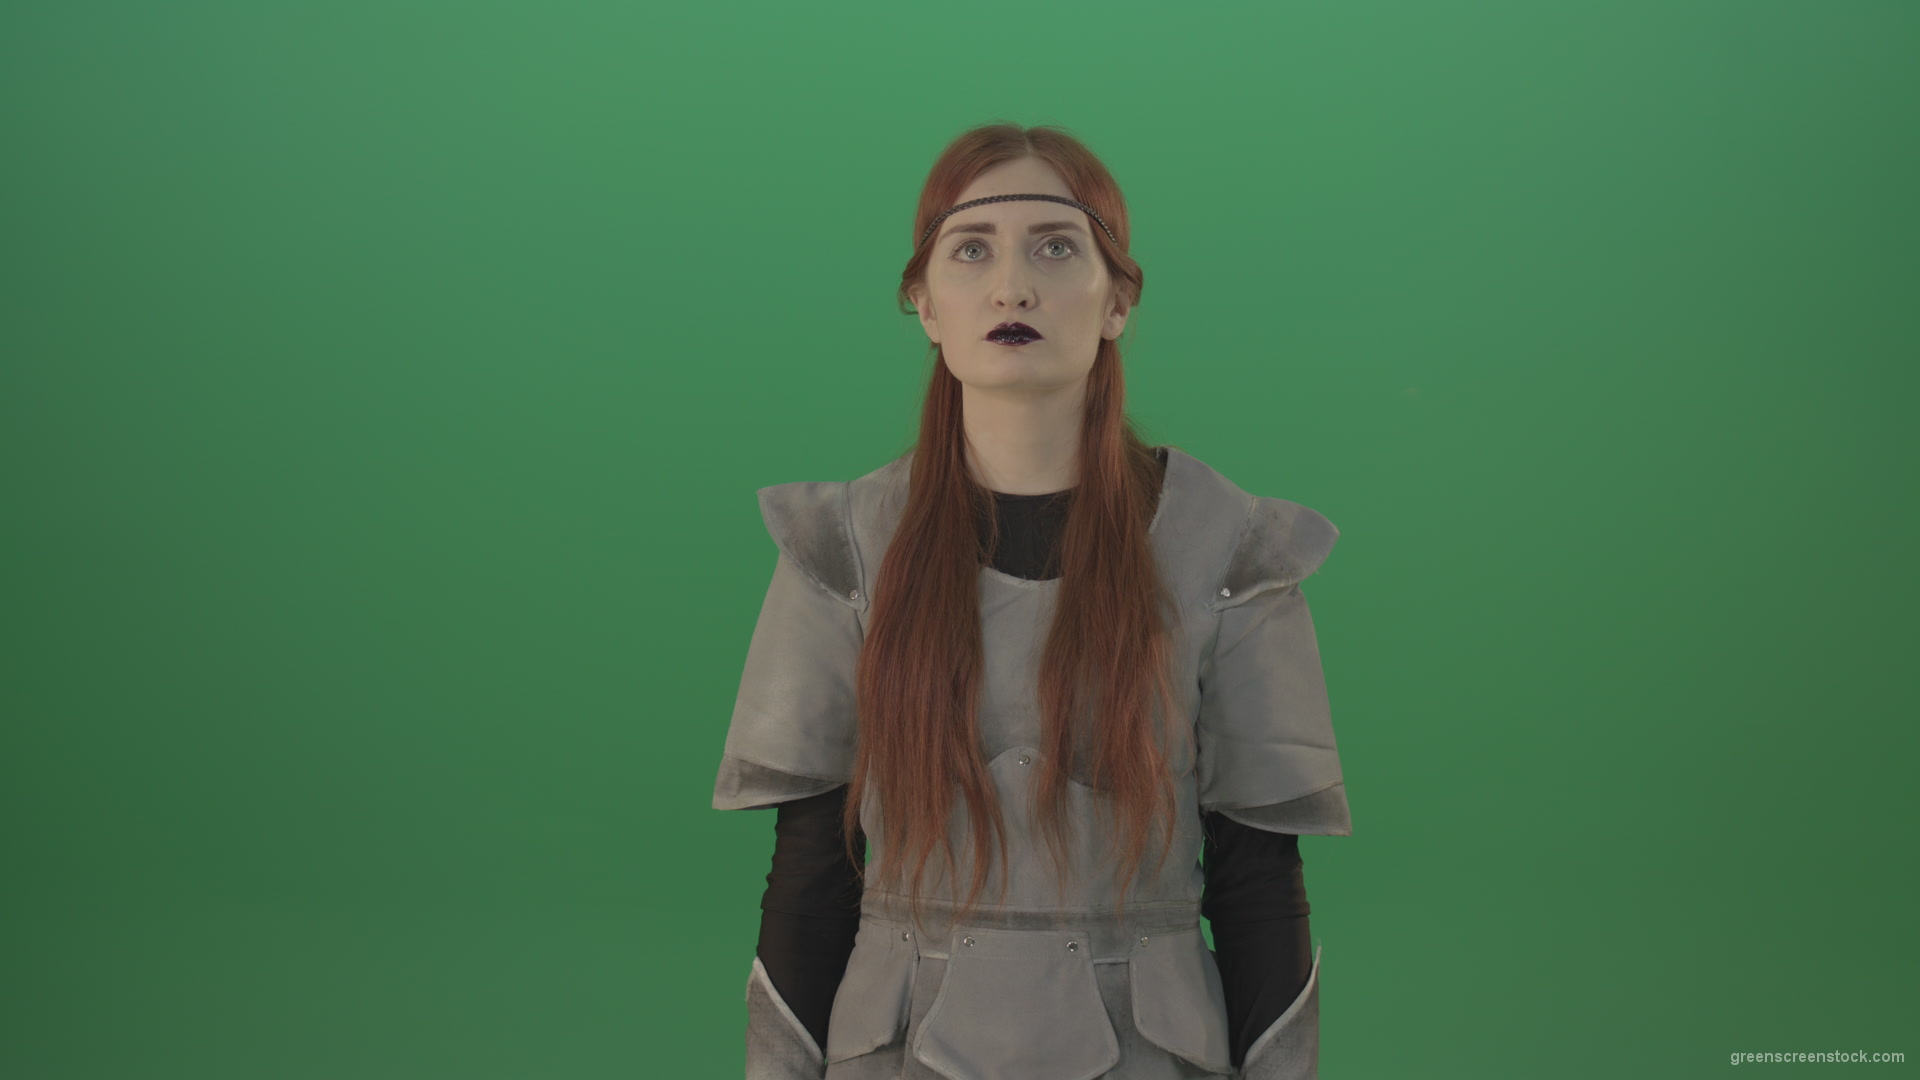 Red-hair-girl-praying-god-in-medieval-warrior-costume-in-green-screen-studio_001 Green Screen Stock